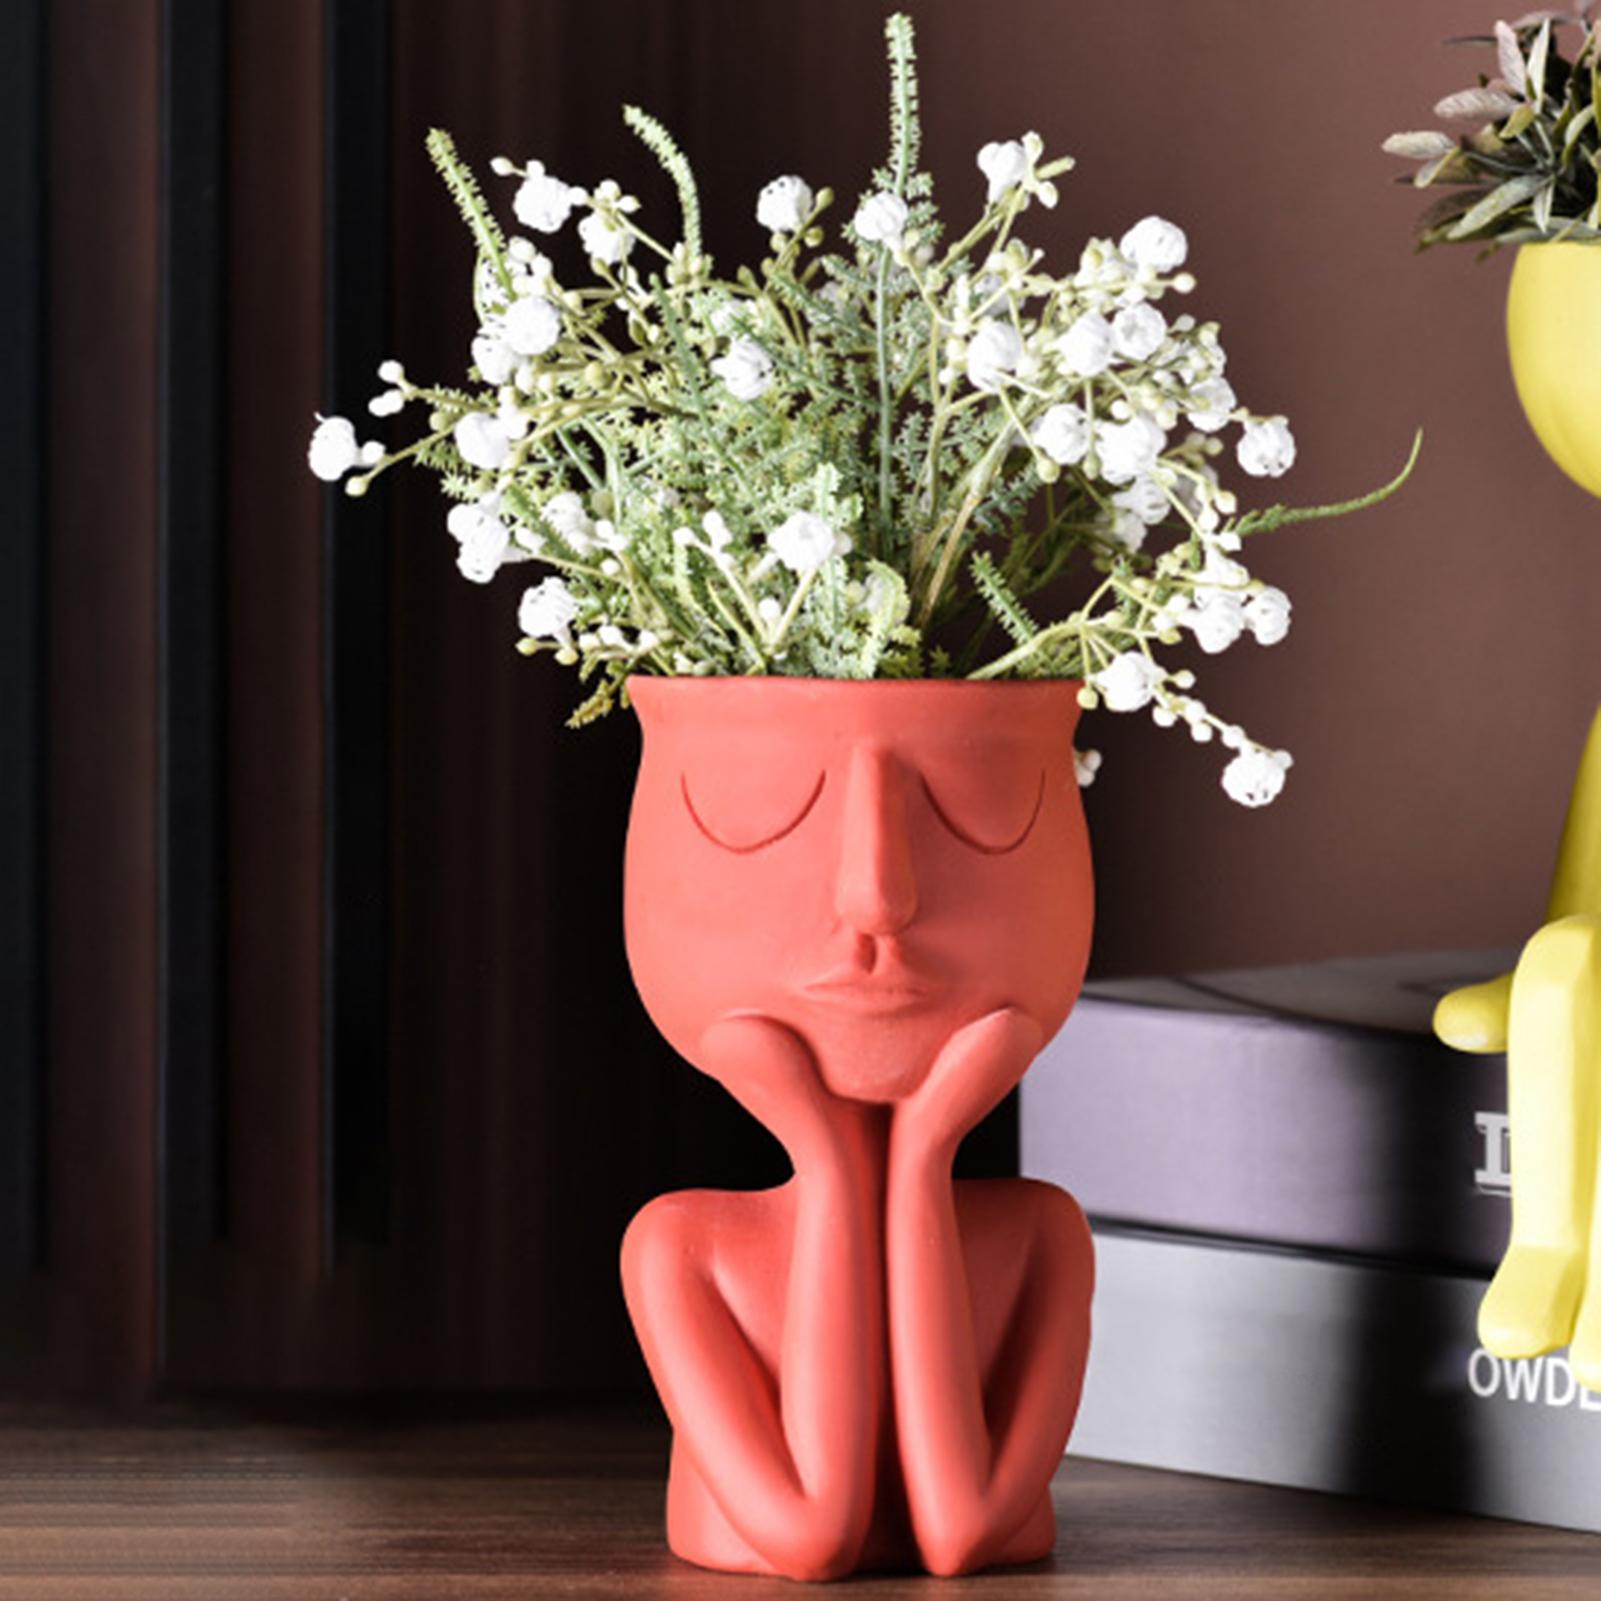 Human Think Face Ceramic Home Plants Flower Pot Vase Planter Tabletop Decoration Sculpture TableDecoration Flower Vases Portrait